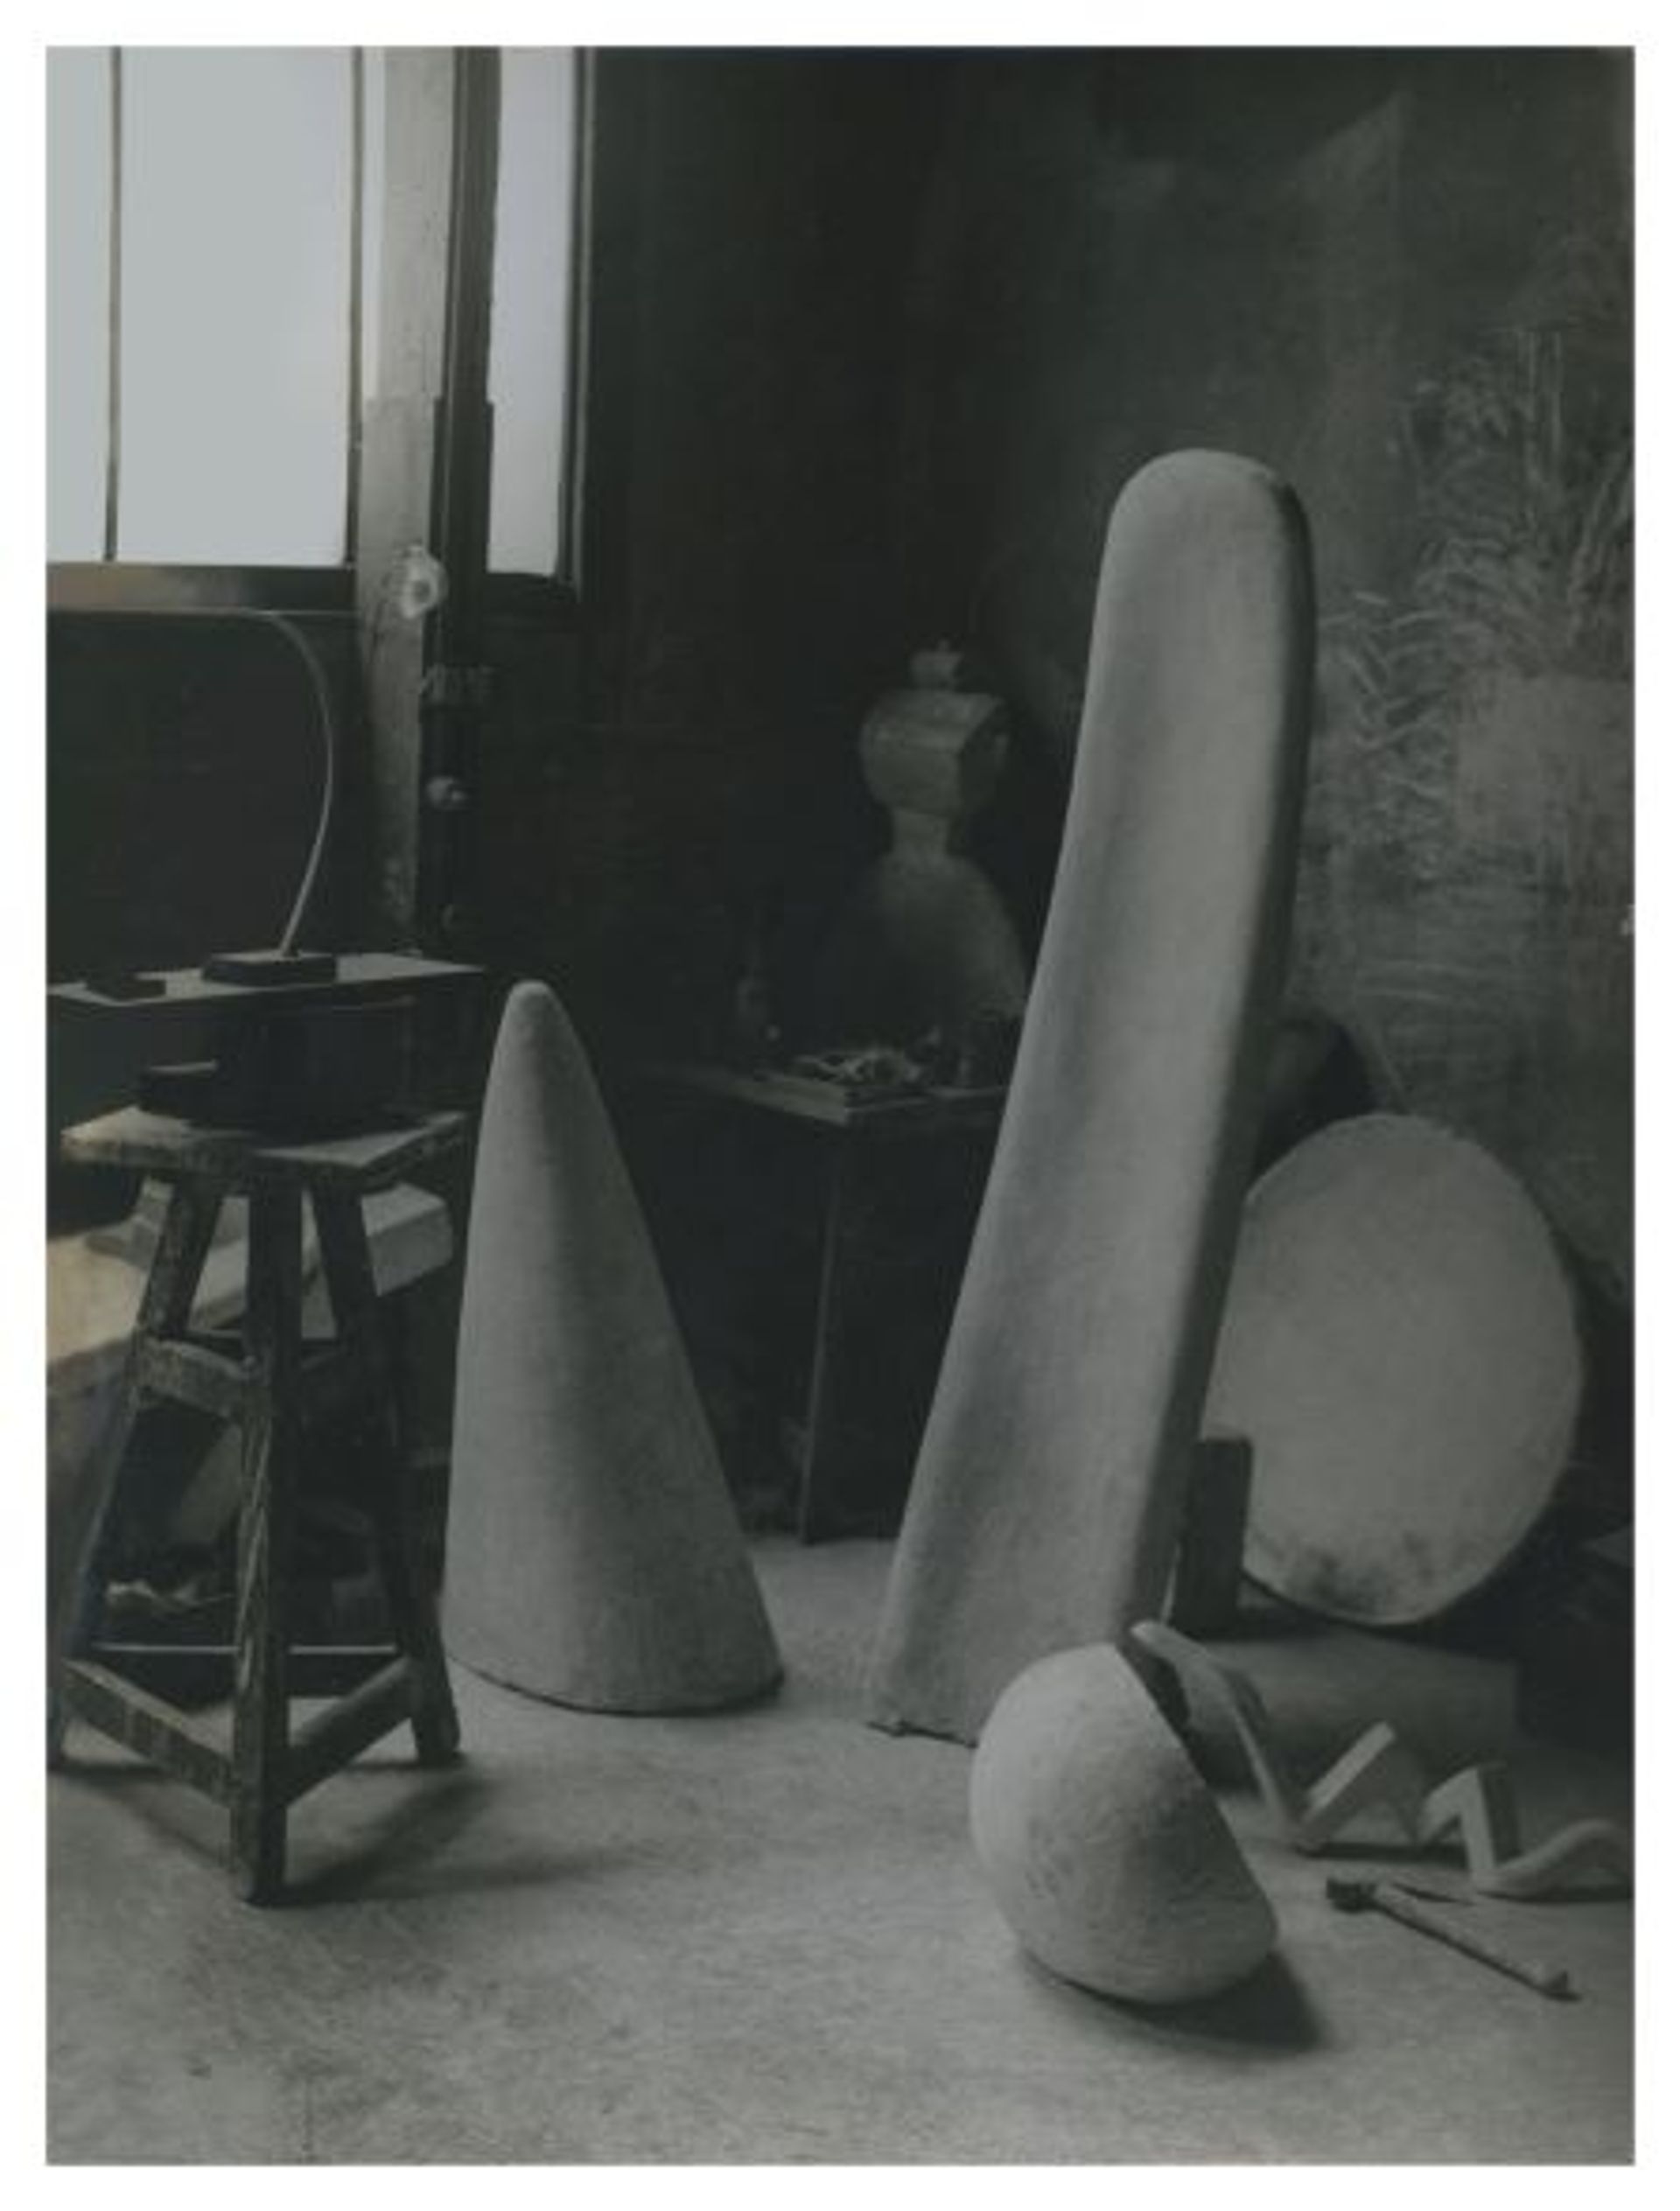 Projet pour une place dans l’atelier d’Alberto Giacometti, vers 1933, archives Fondation Giacometti Photo Brassaï 

© RMN-Grand Palais/ Fondation Giacometti